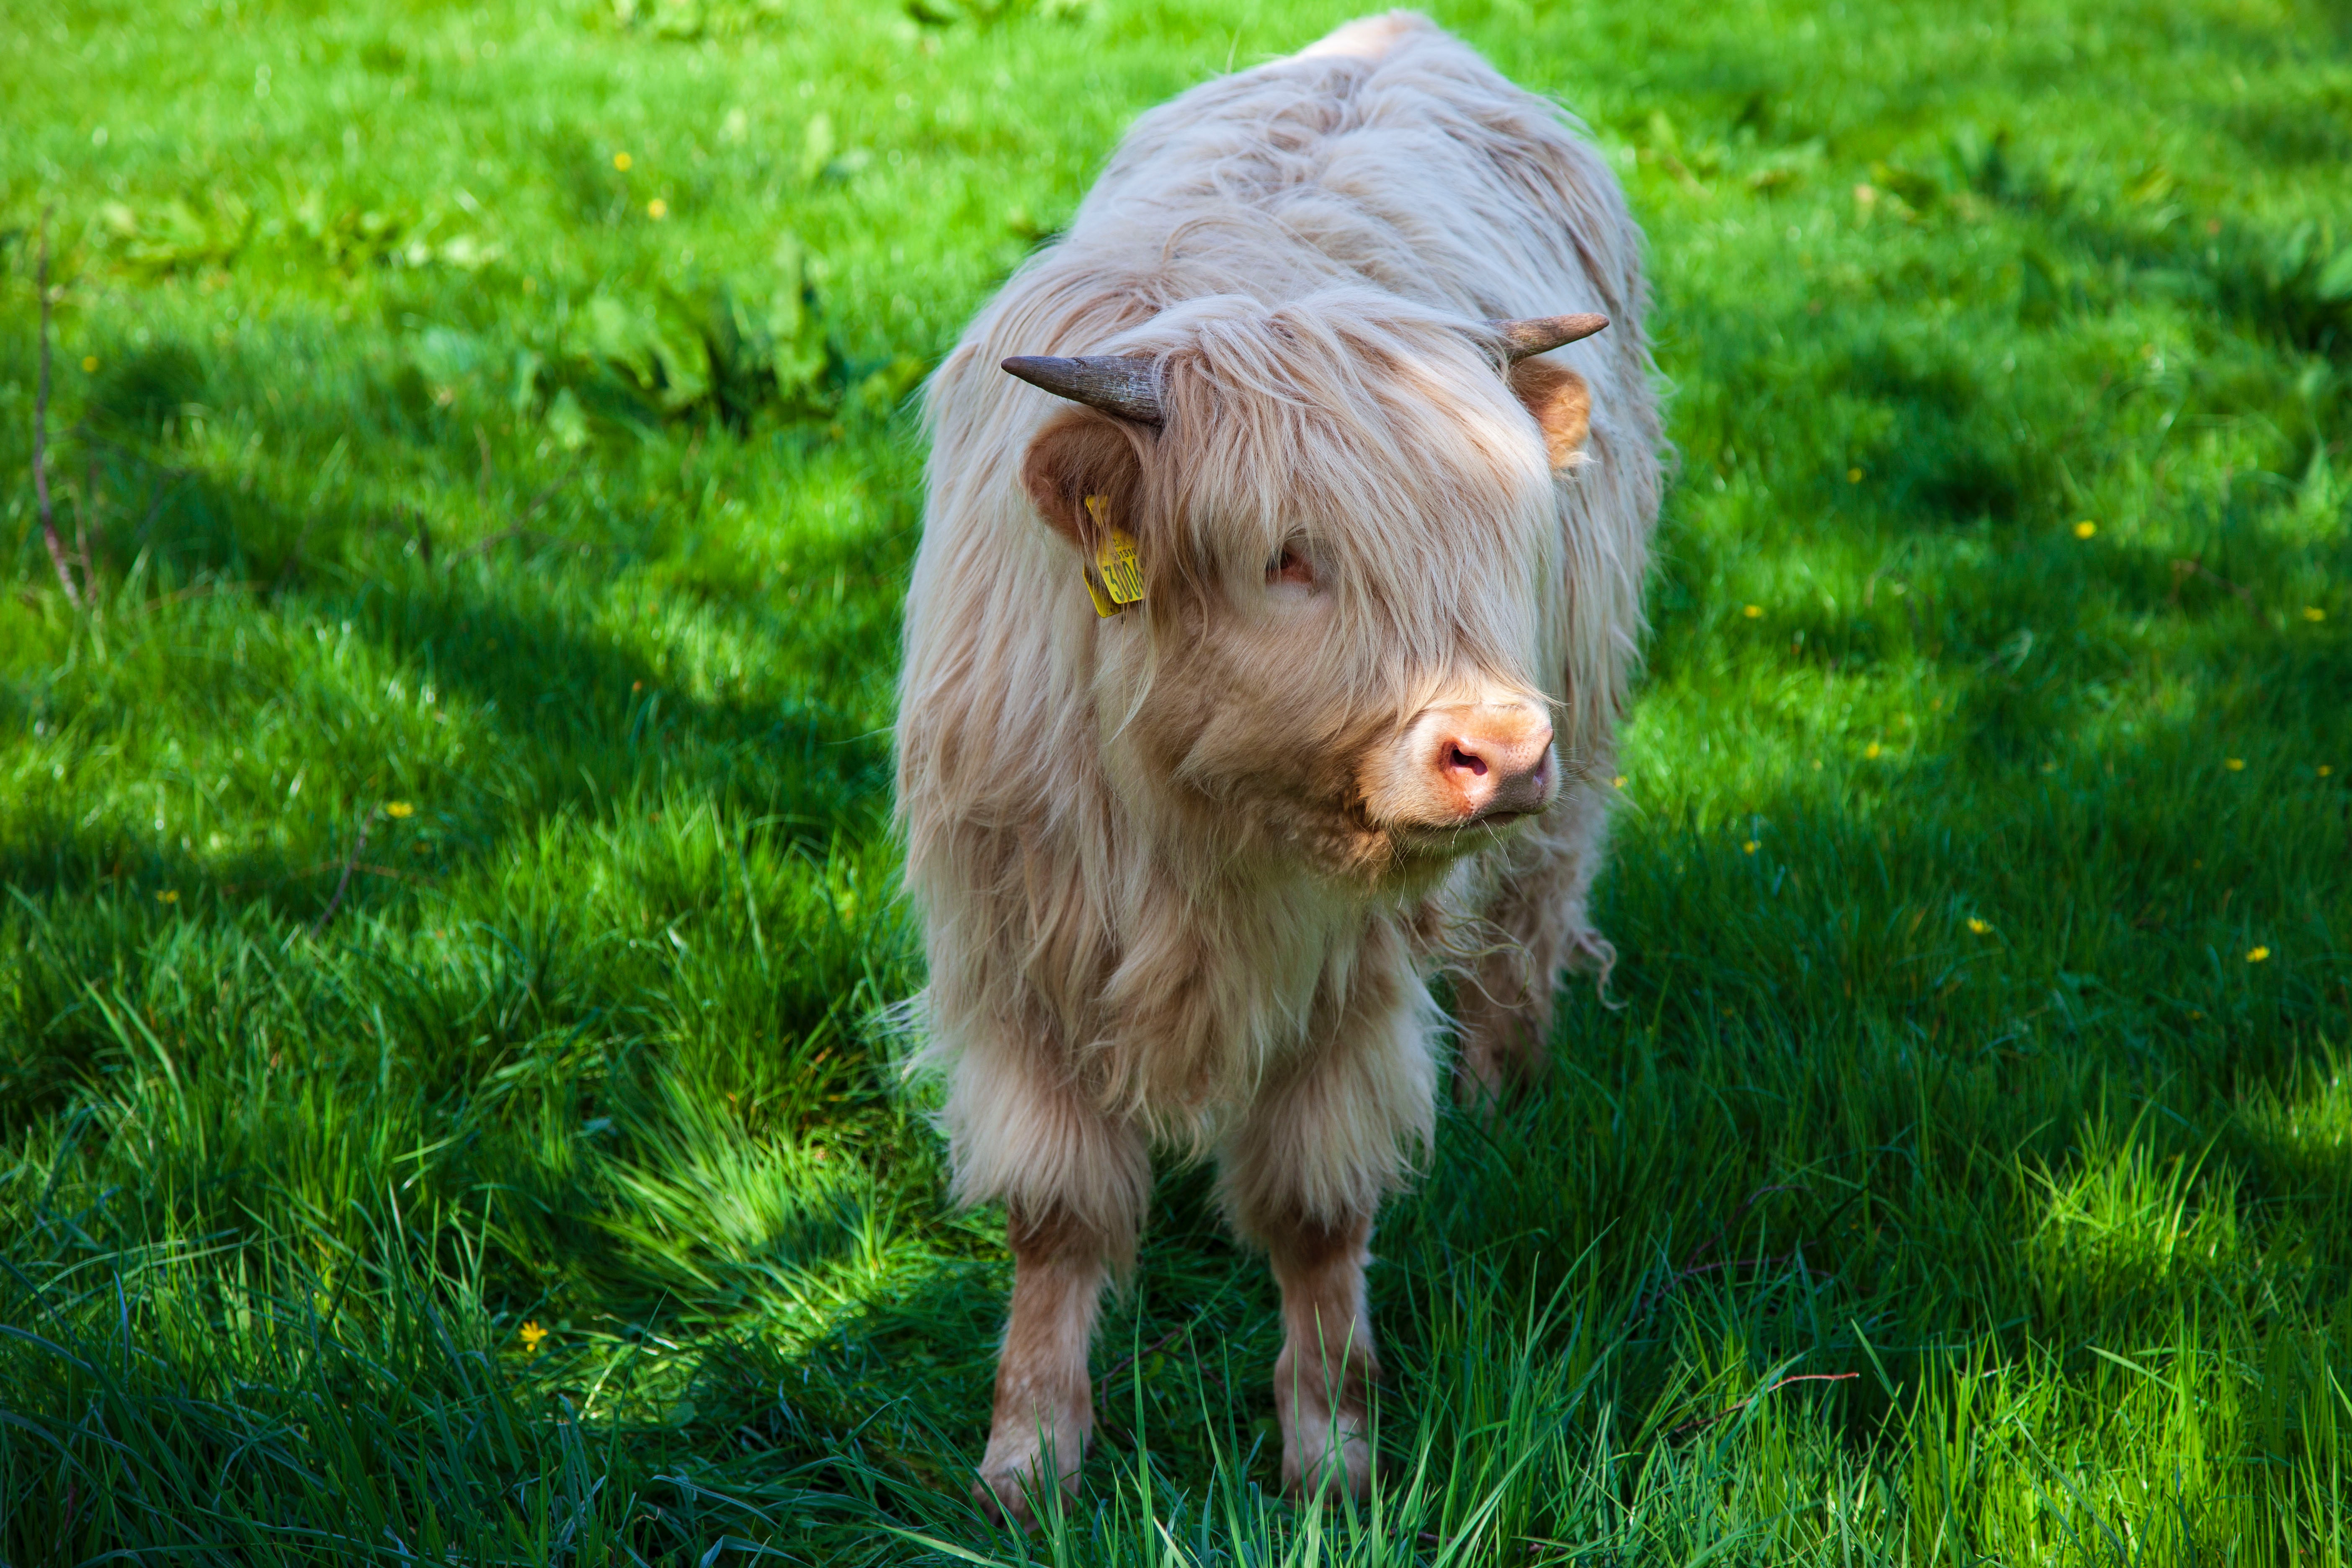 Cute Highland Calf  Cows  Animals Background Wallpapers on Desktop Nexus  Image 2222581